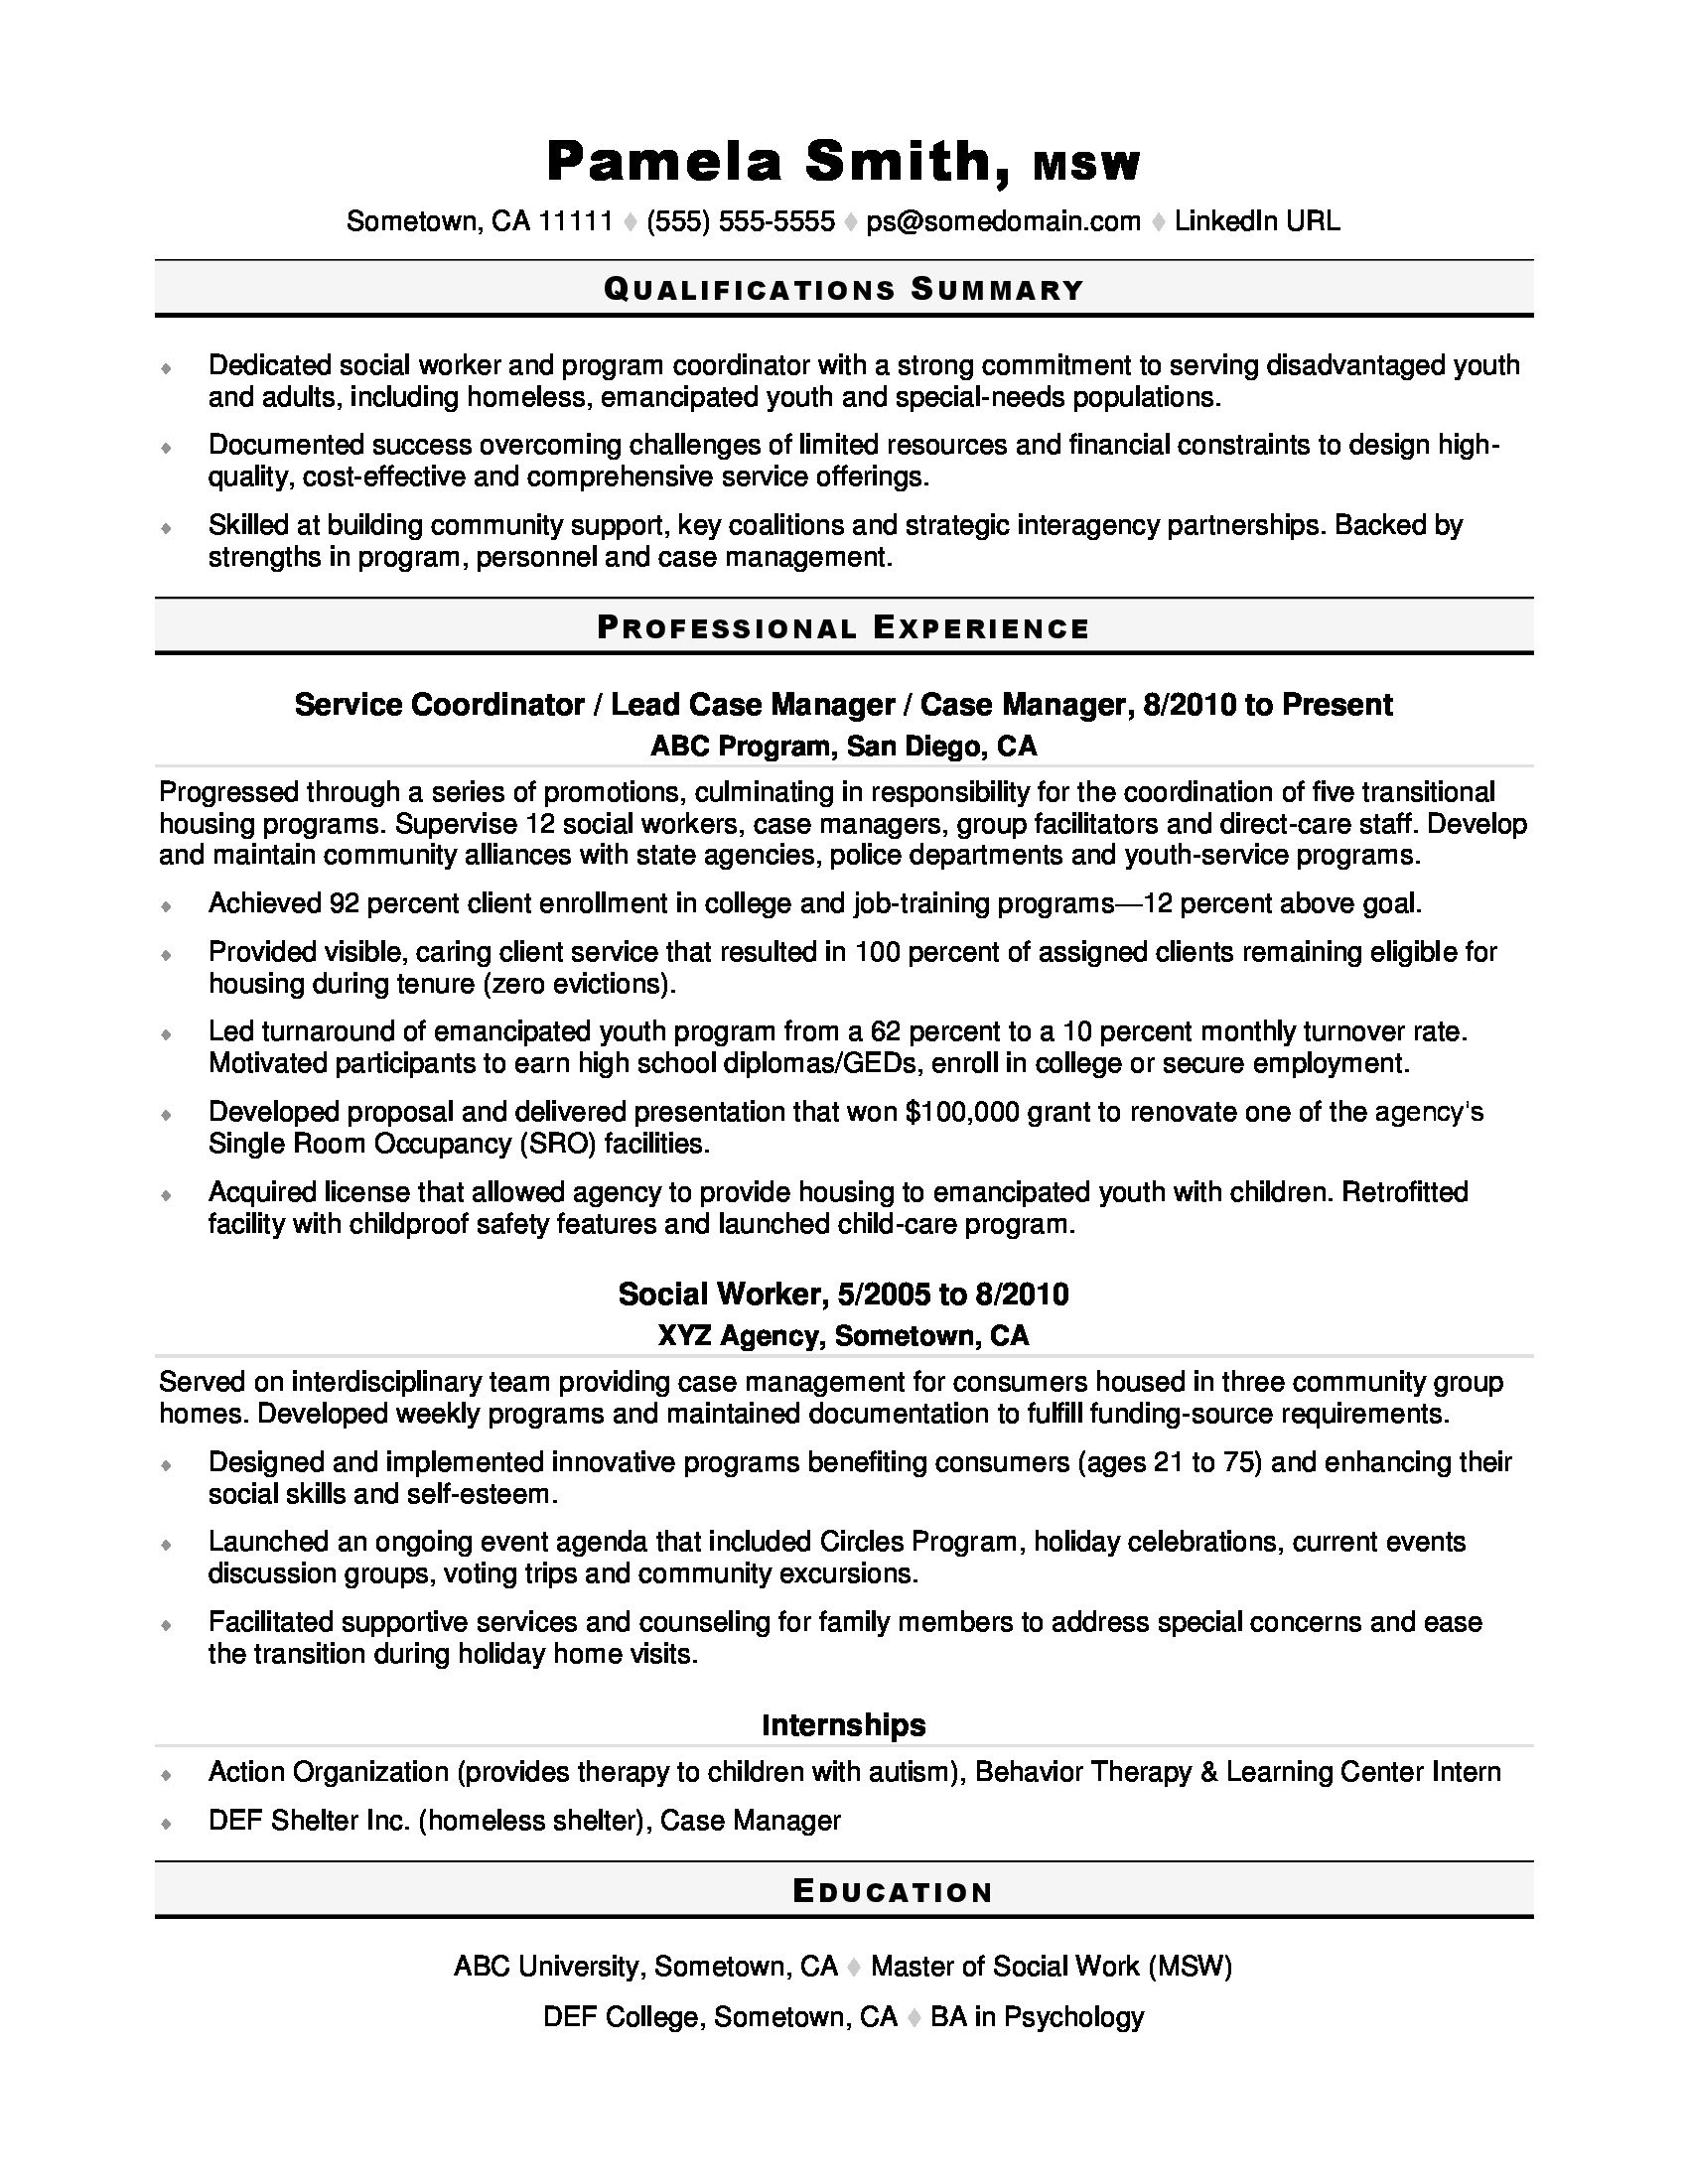 Free Sample Resume Cgild Protective Services Manager Bilingual social Work Resume Monster.com